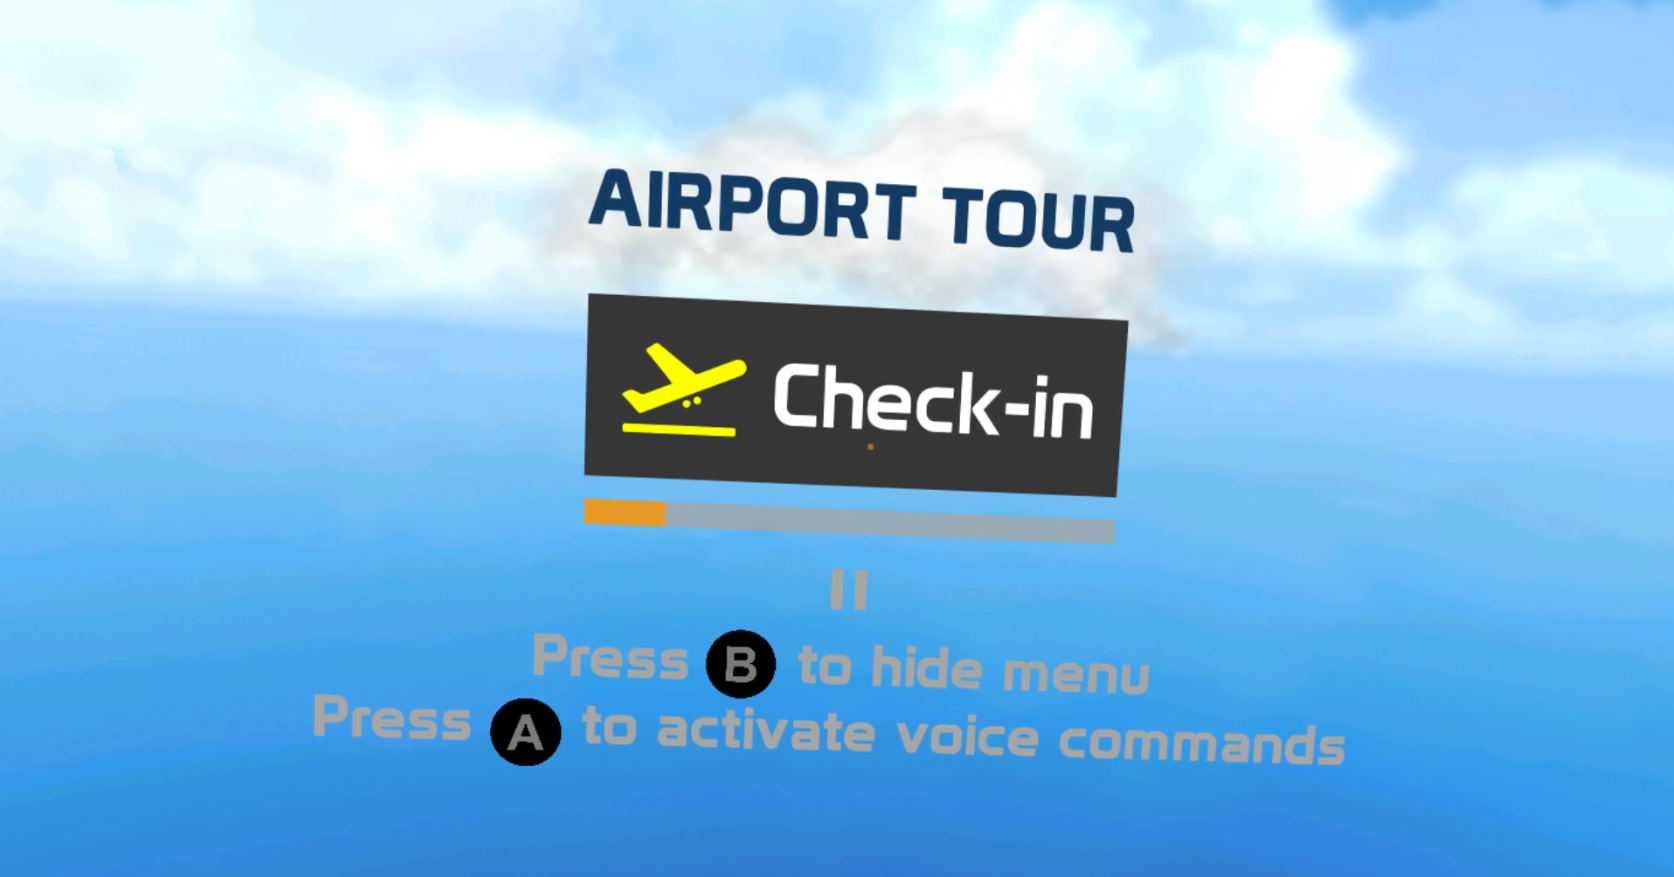 Boise airport tour logo